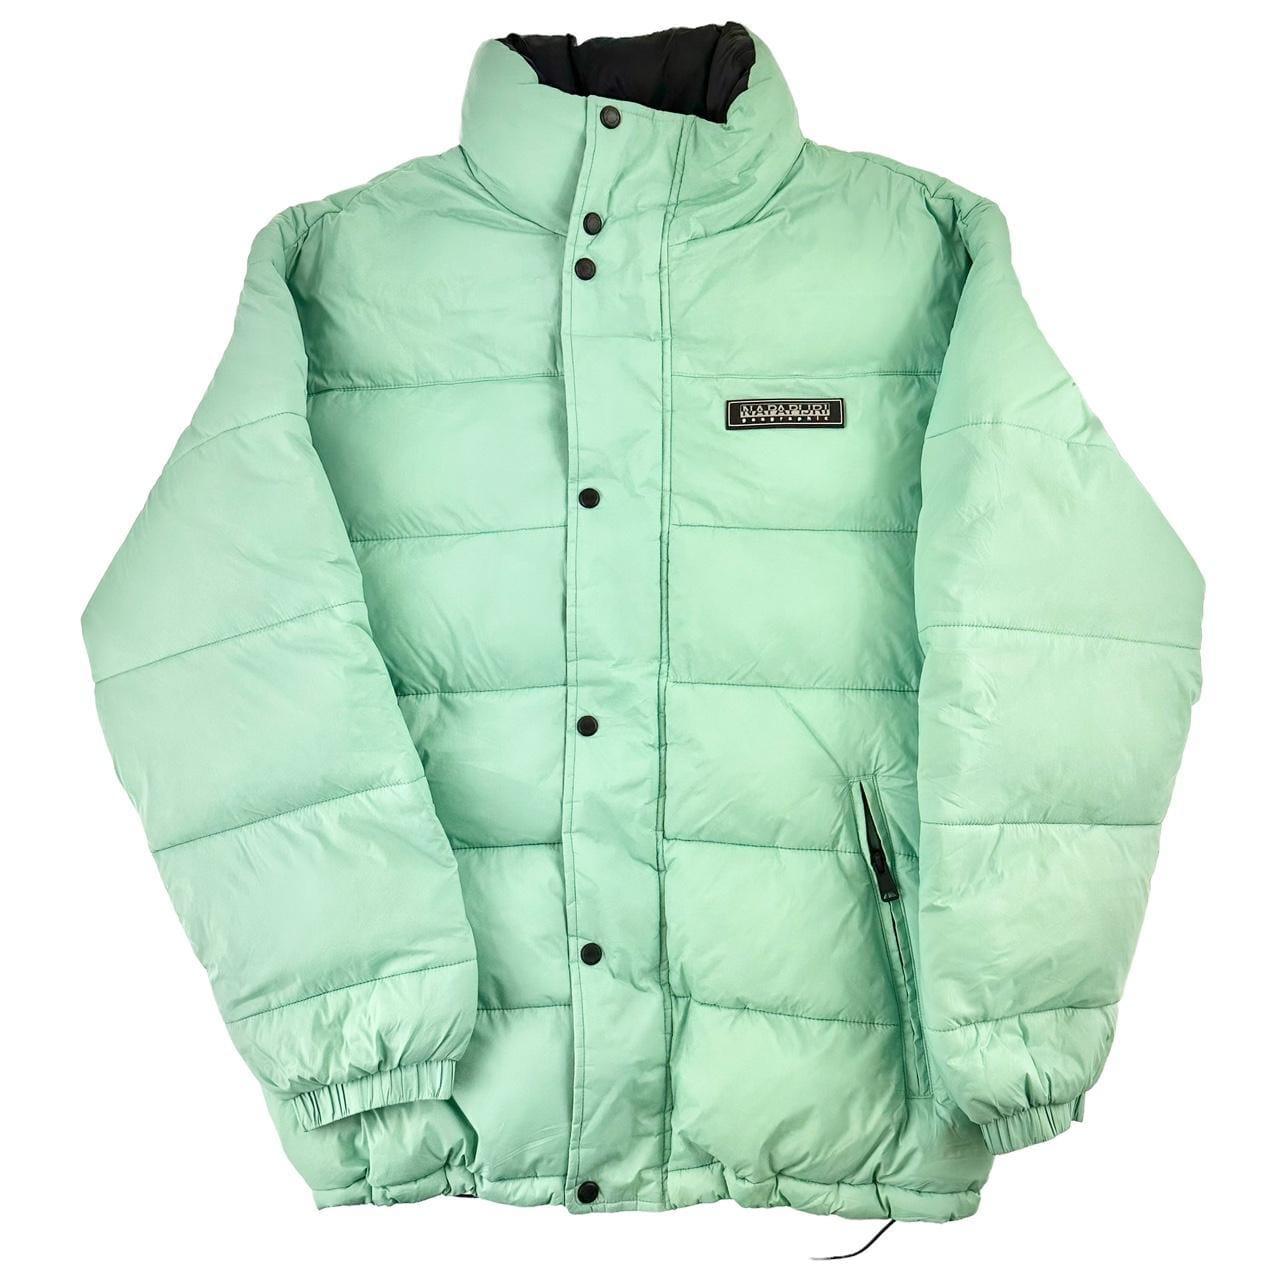 Napapijri puffer jacket size XL - Known Source